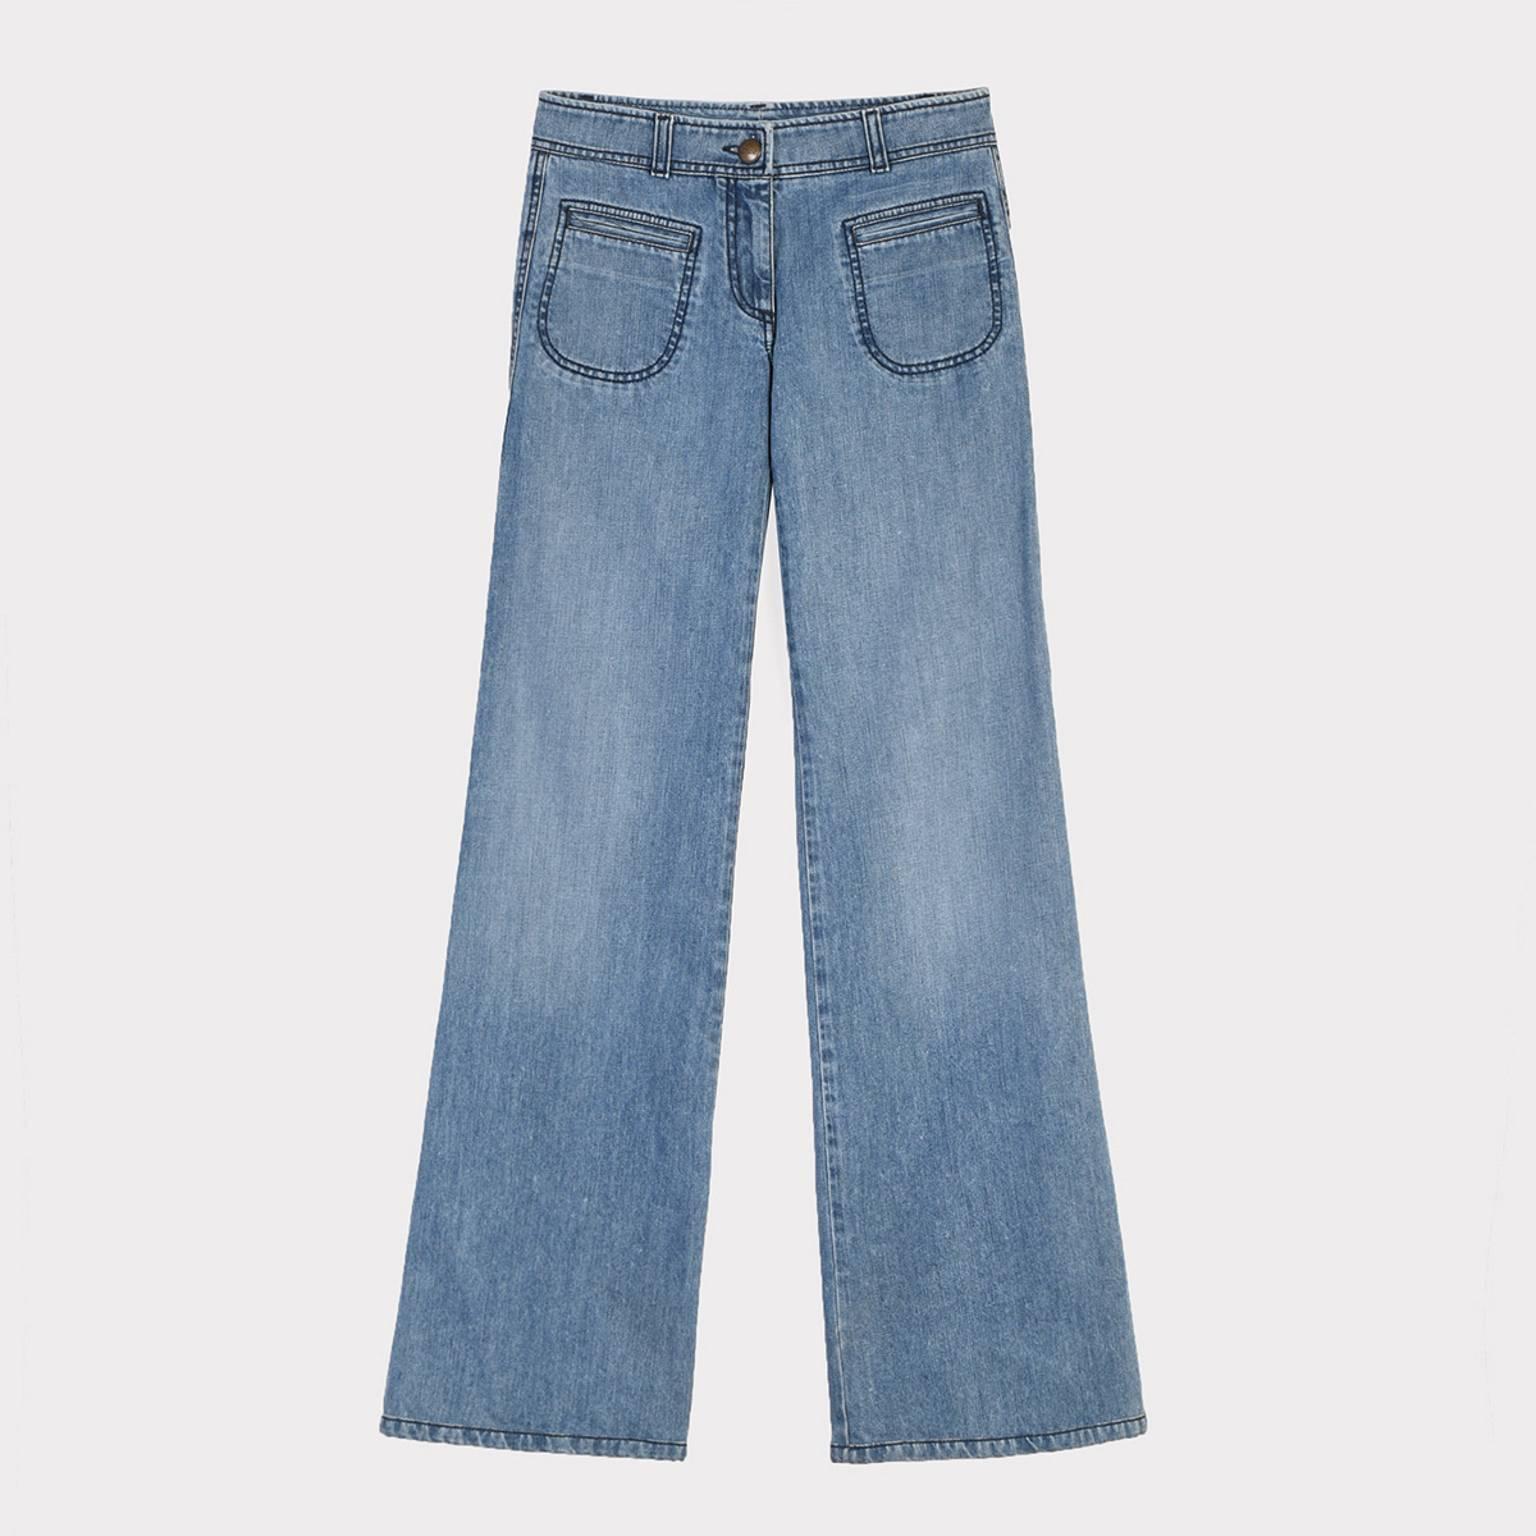 Chloé Jeans  In New Condition For Sale In Xiamen, Fujian